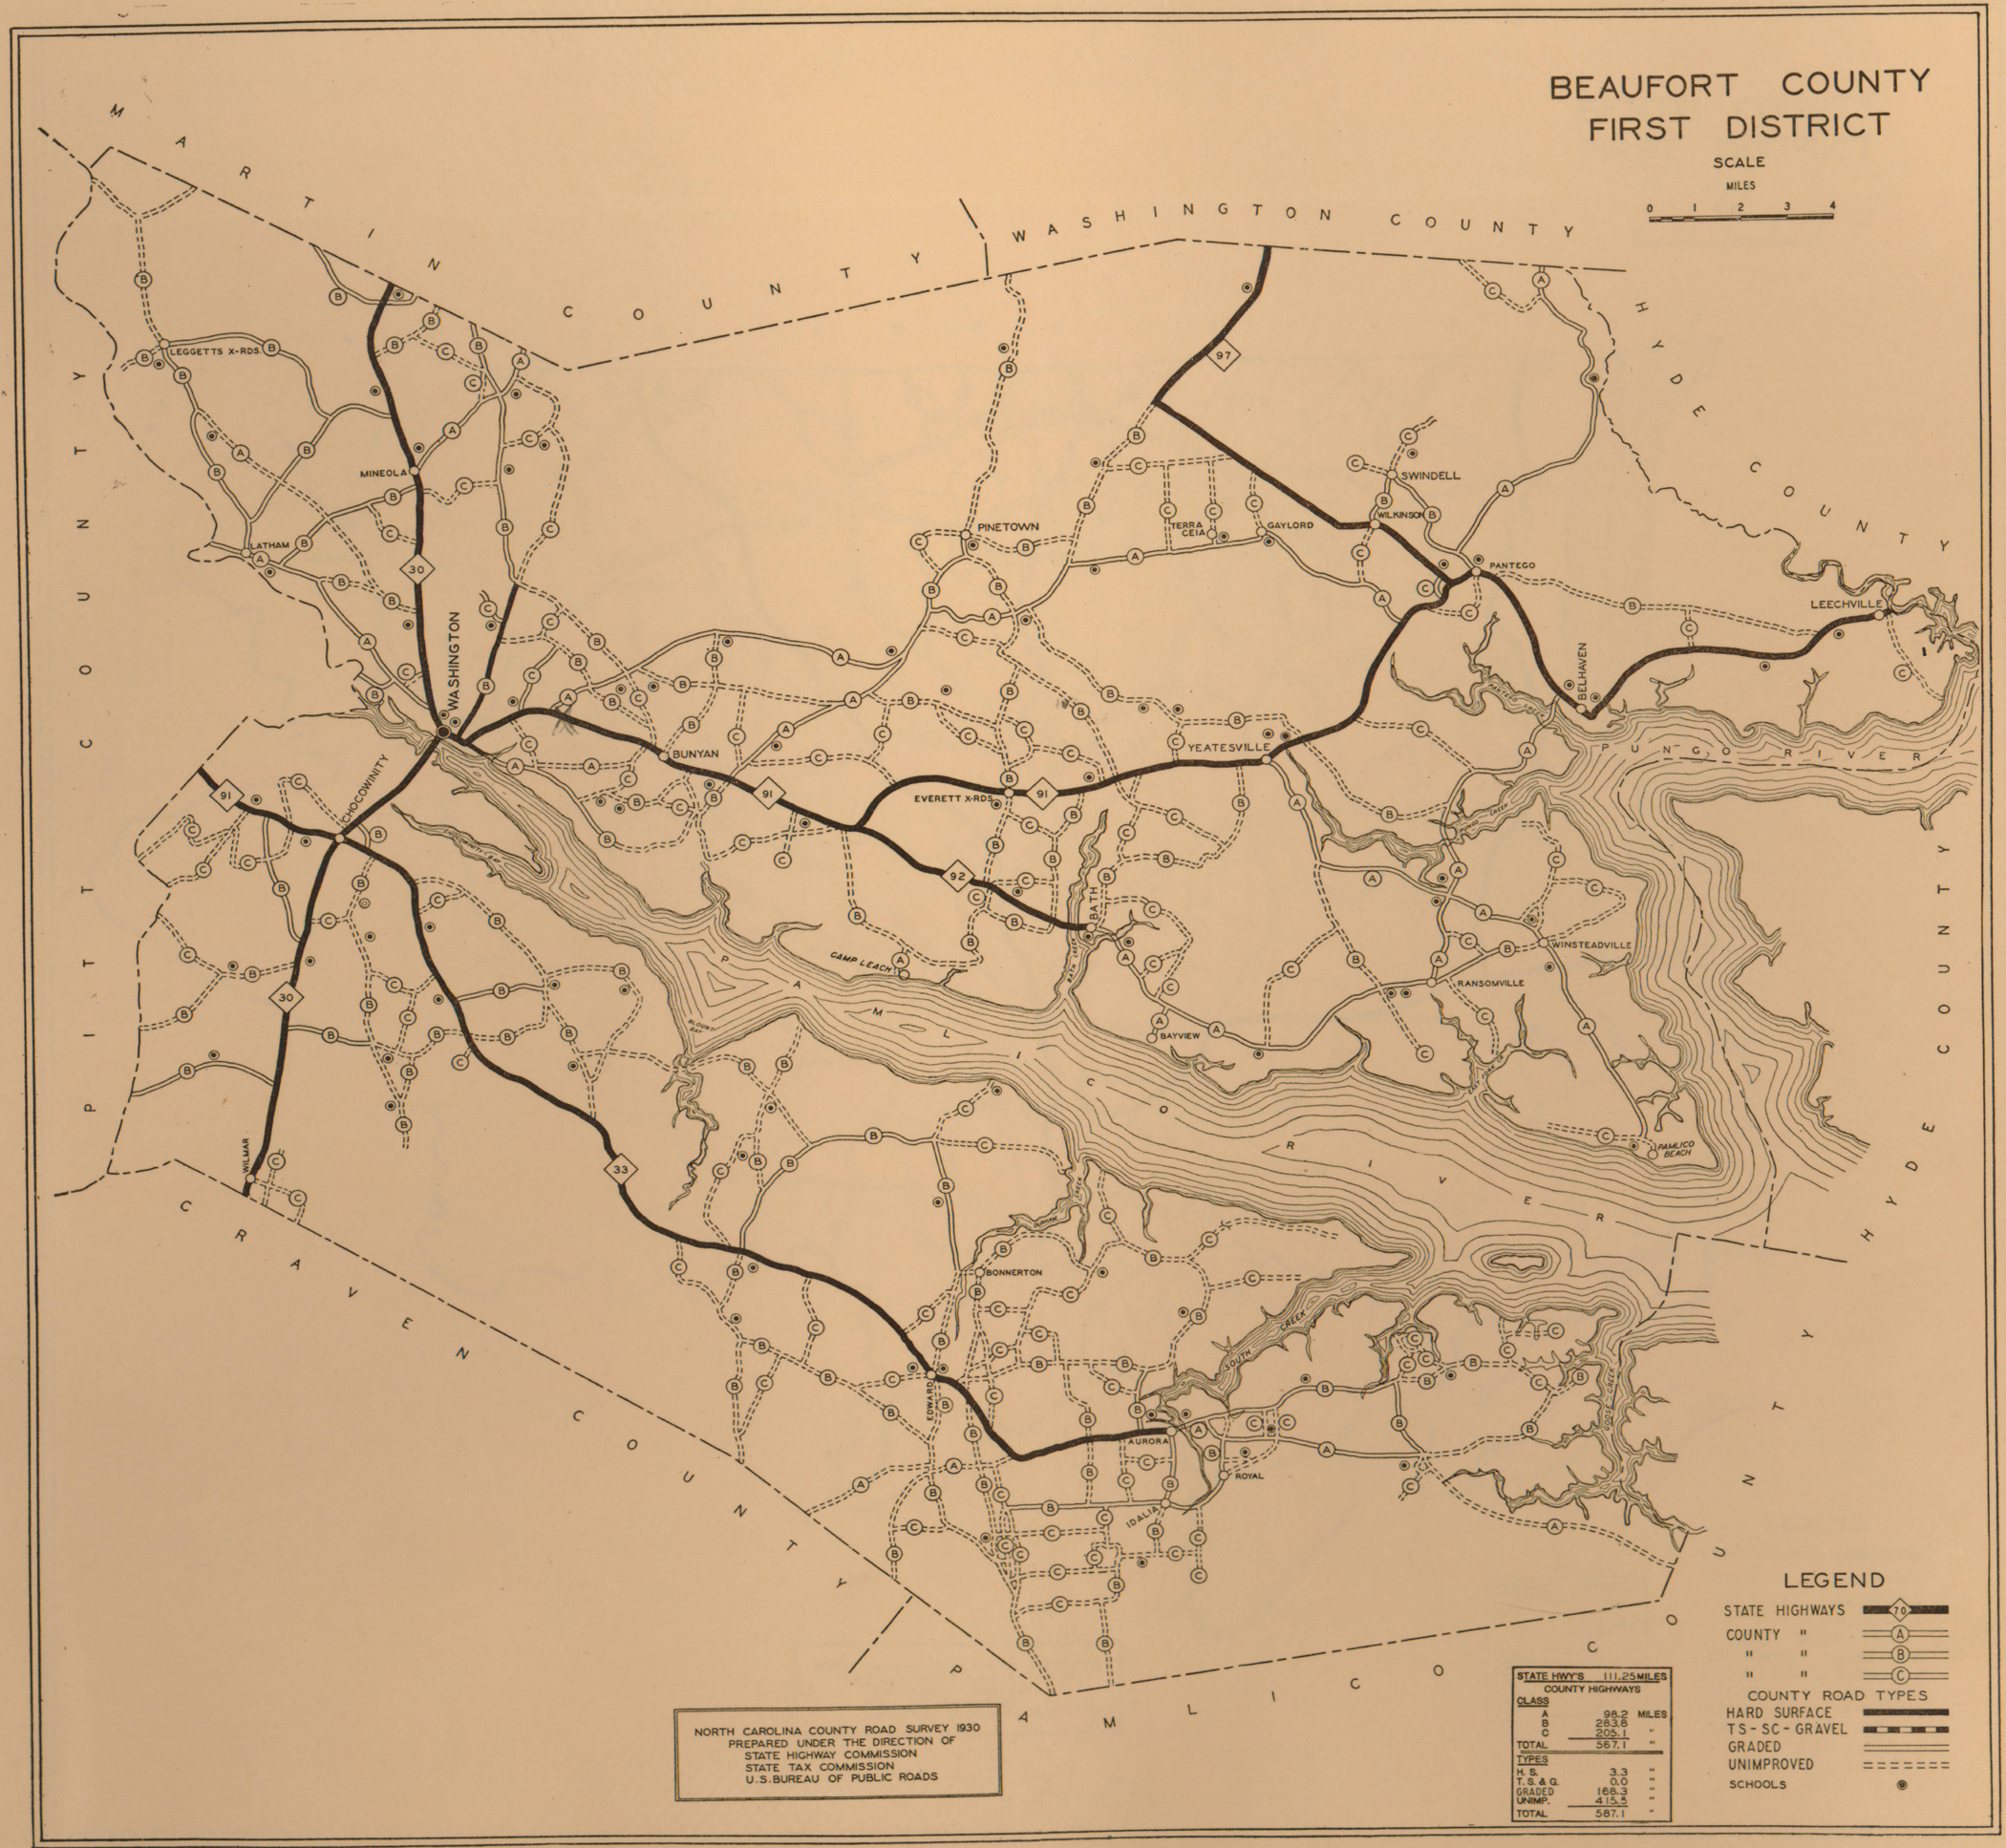 1930 Road Map Of Beaufort County North Carolina